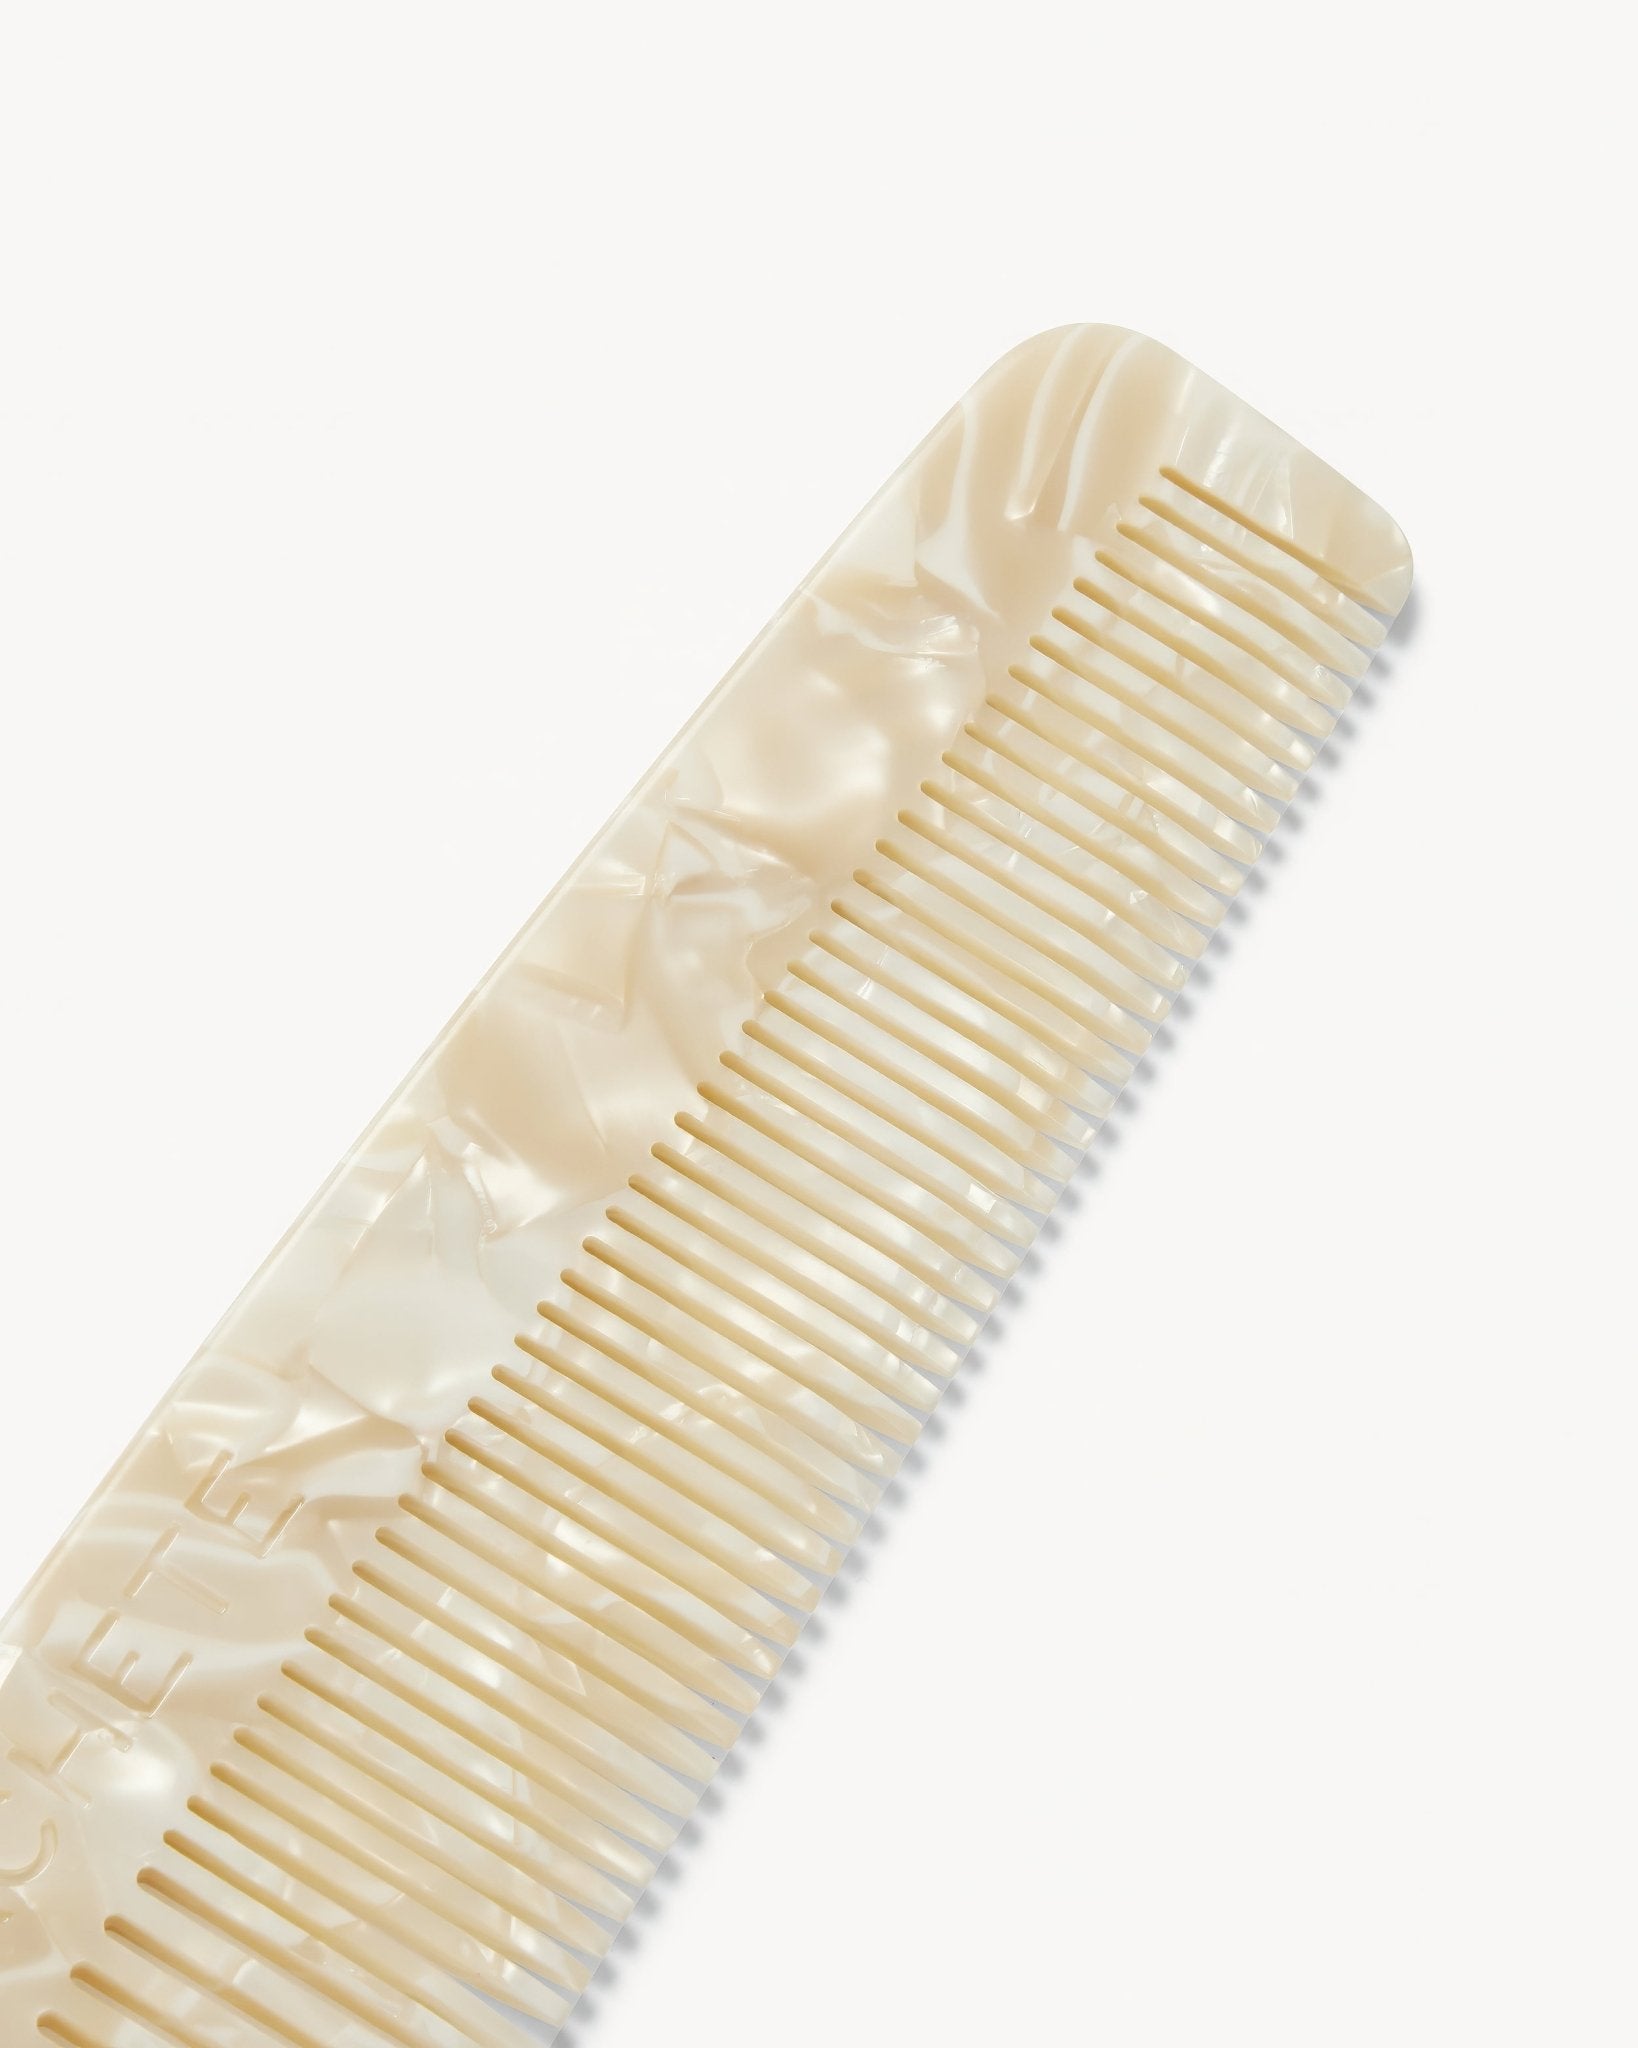 MACHETE No. 1 Comb in Ivory